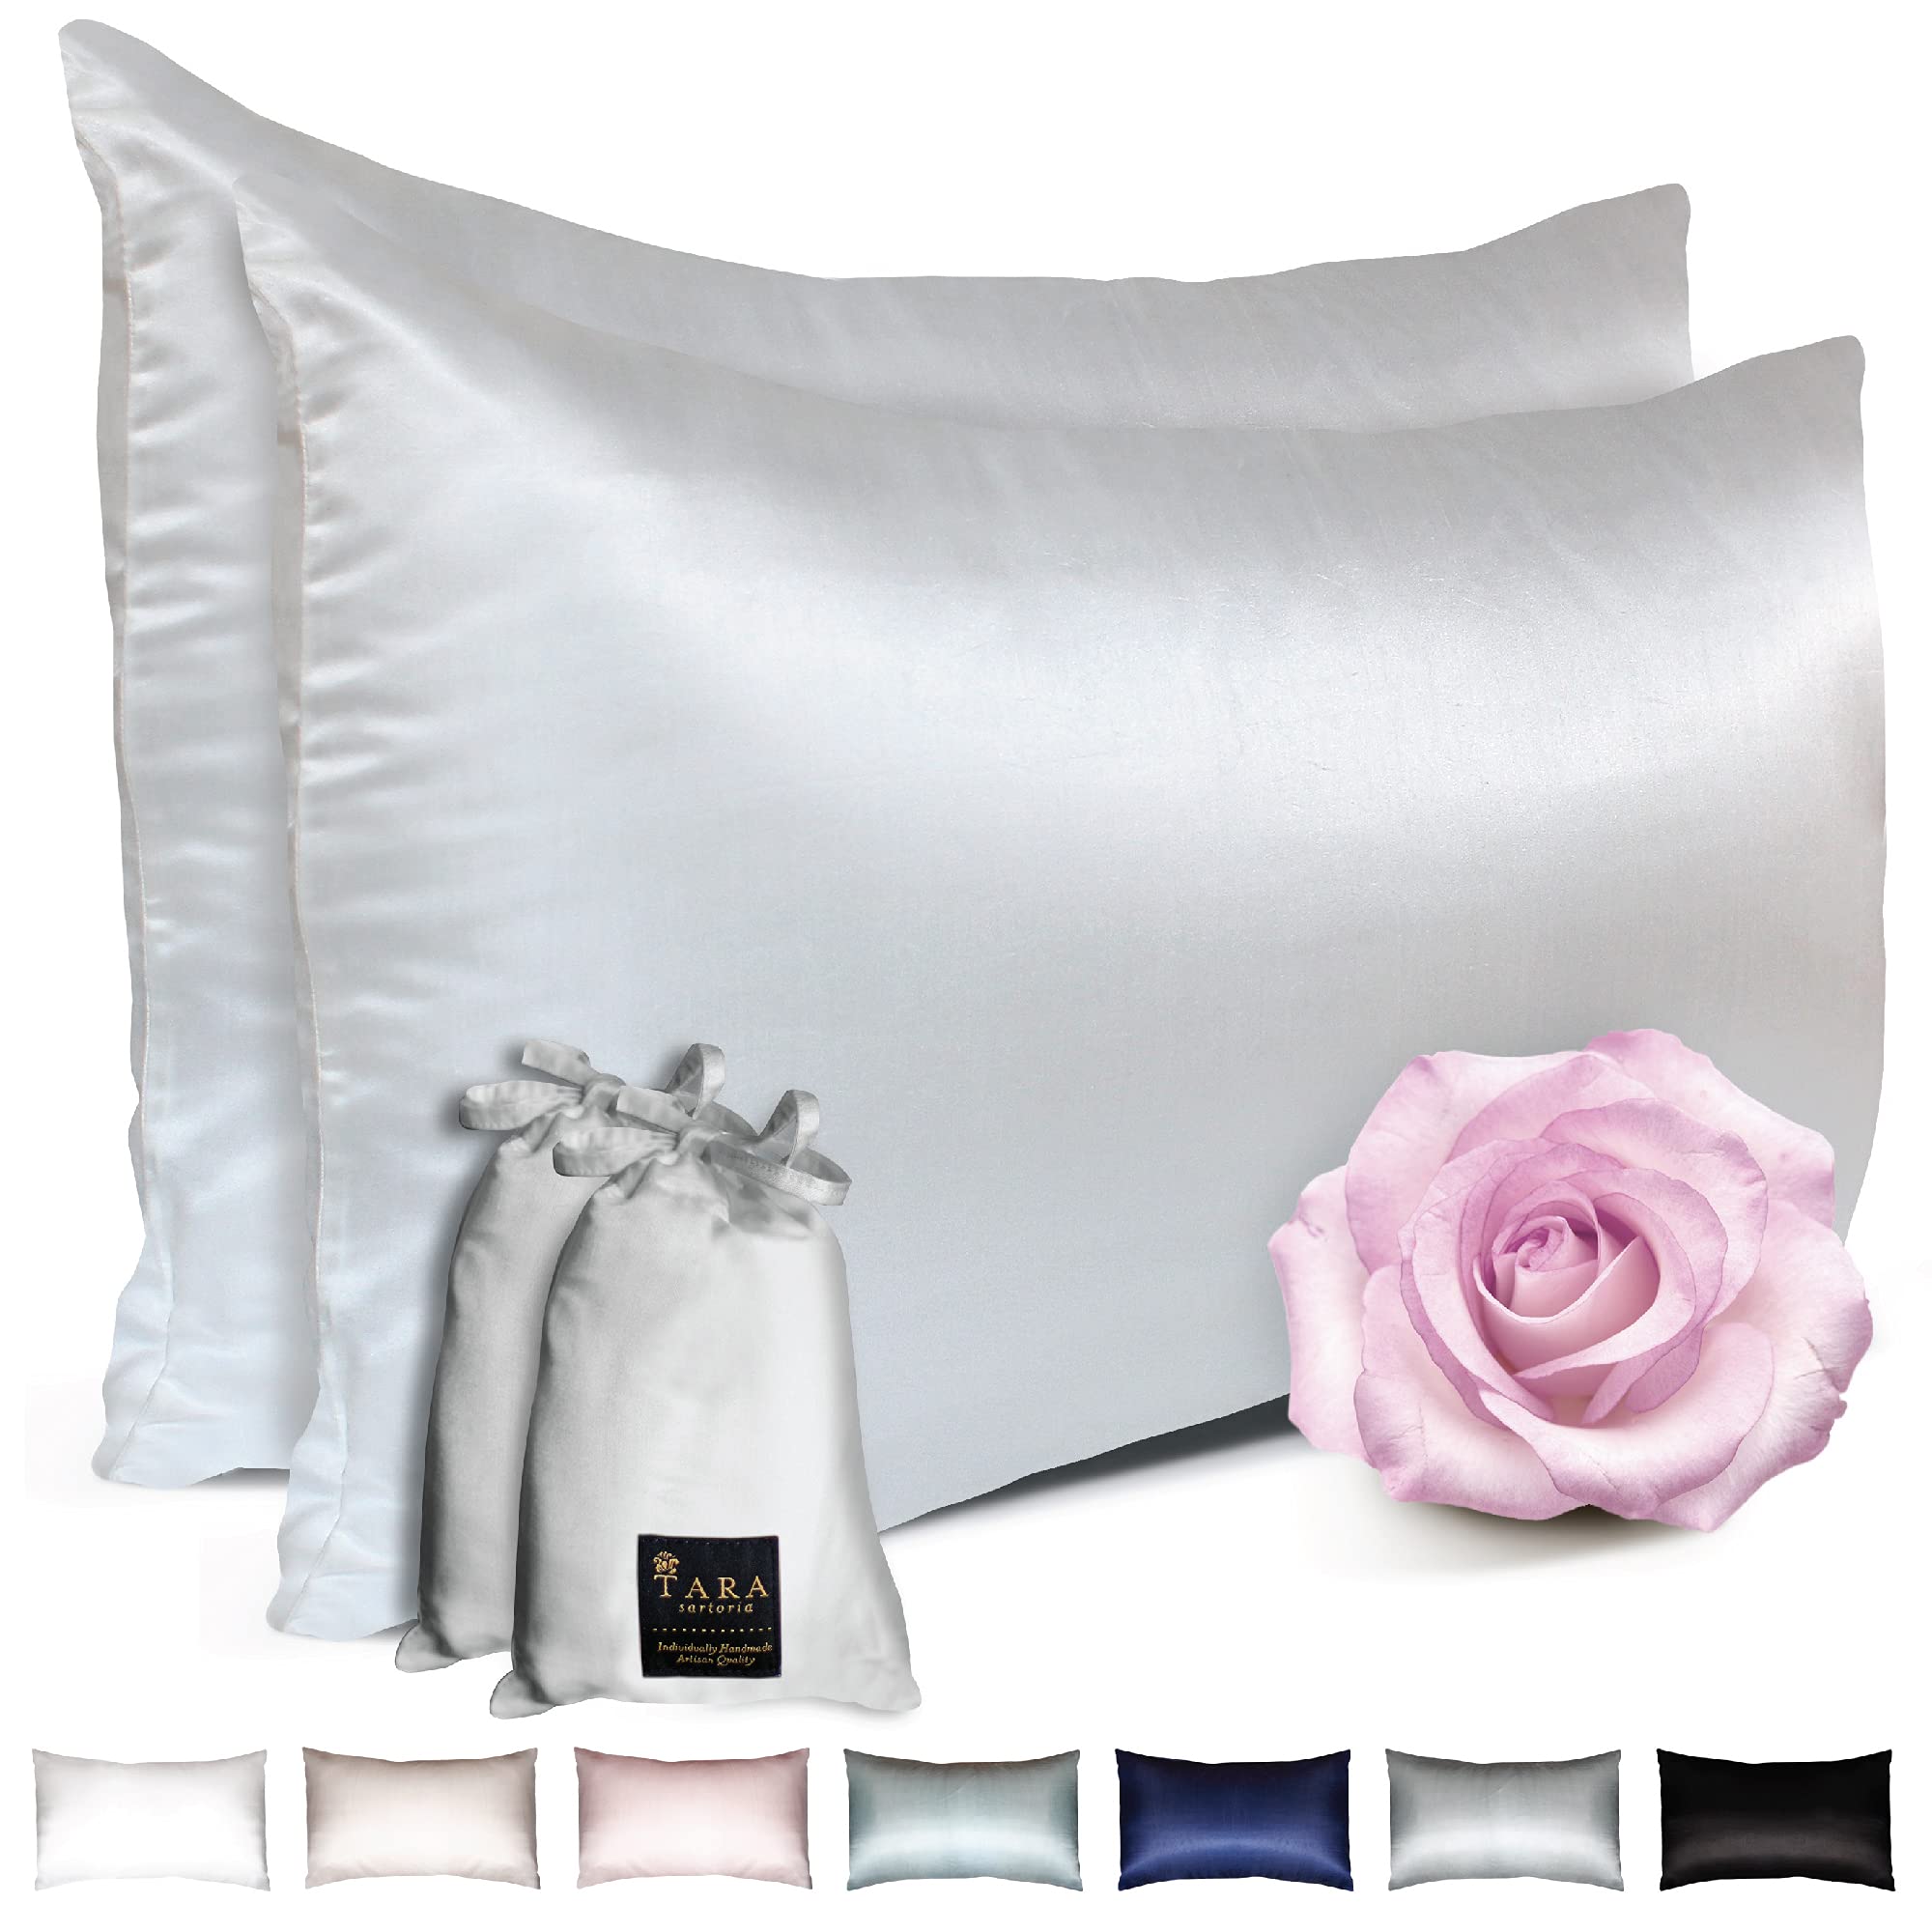 Tara Sartoria Artisan Handmade Silk Pillowcase - 27 Momme Natural Mulberry Silk, Machine Washable, Couture-Grade French Seams, King, Queen Silk Pil...